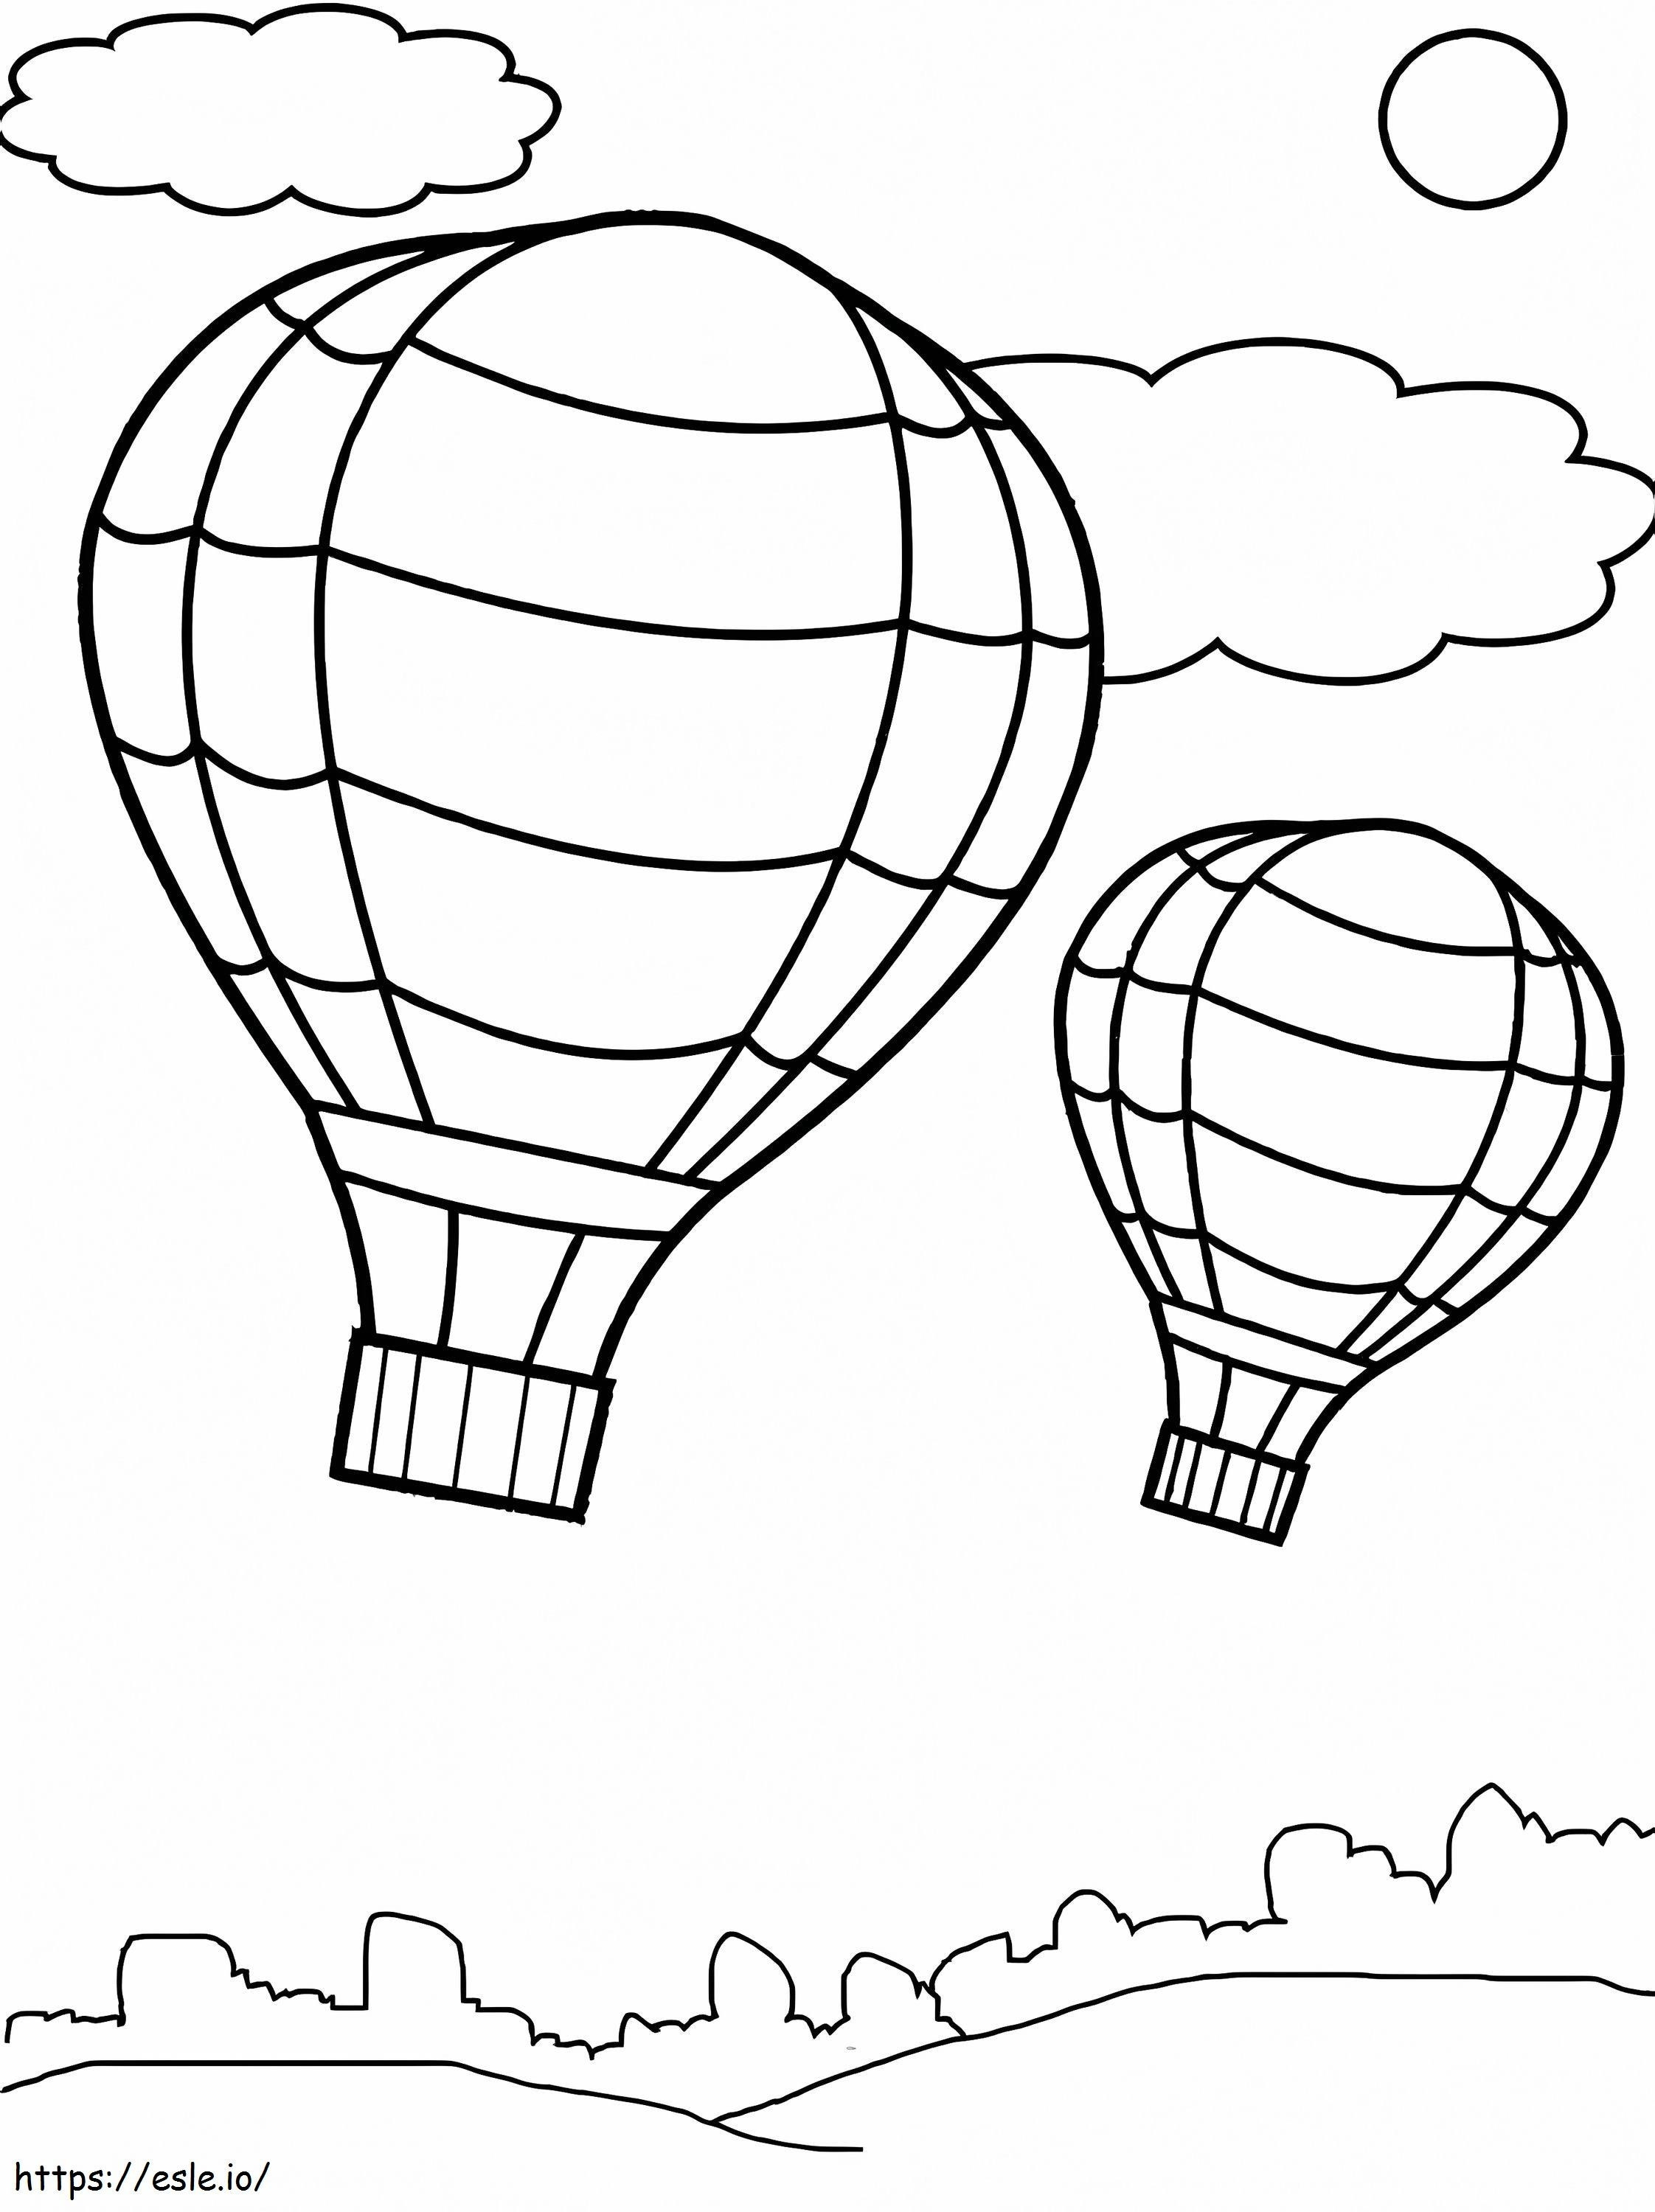 Zwei gute Heißluftballons ausmalbilder